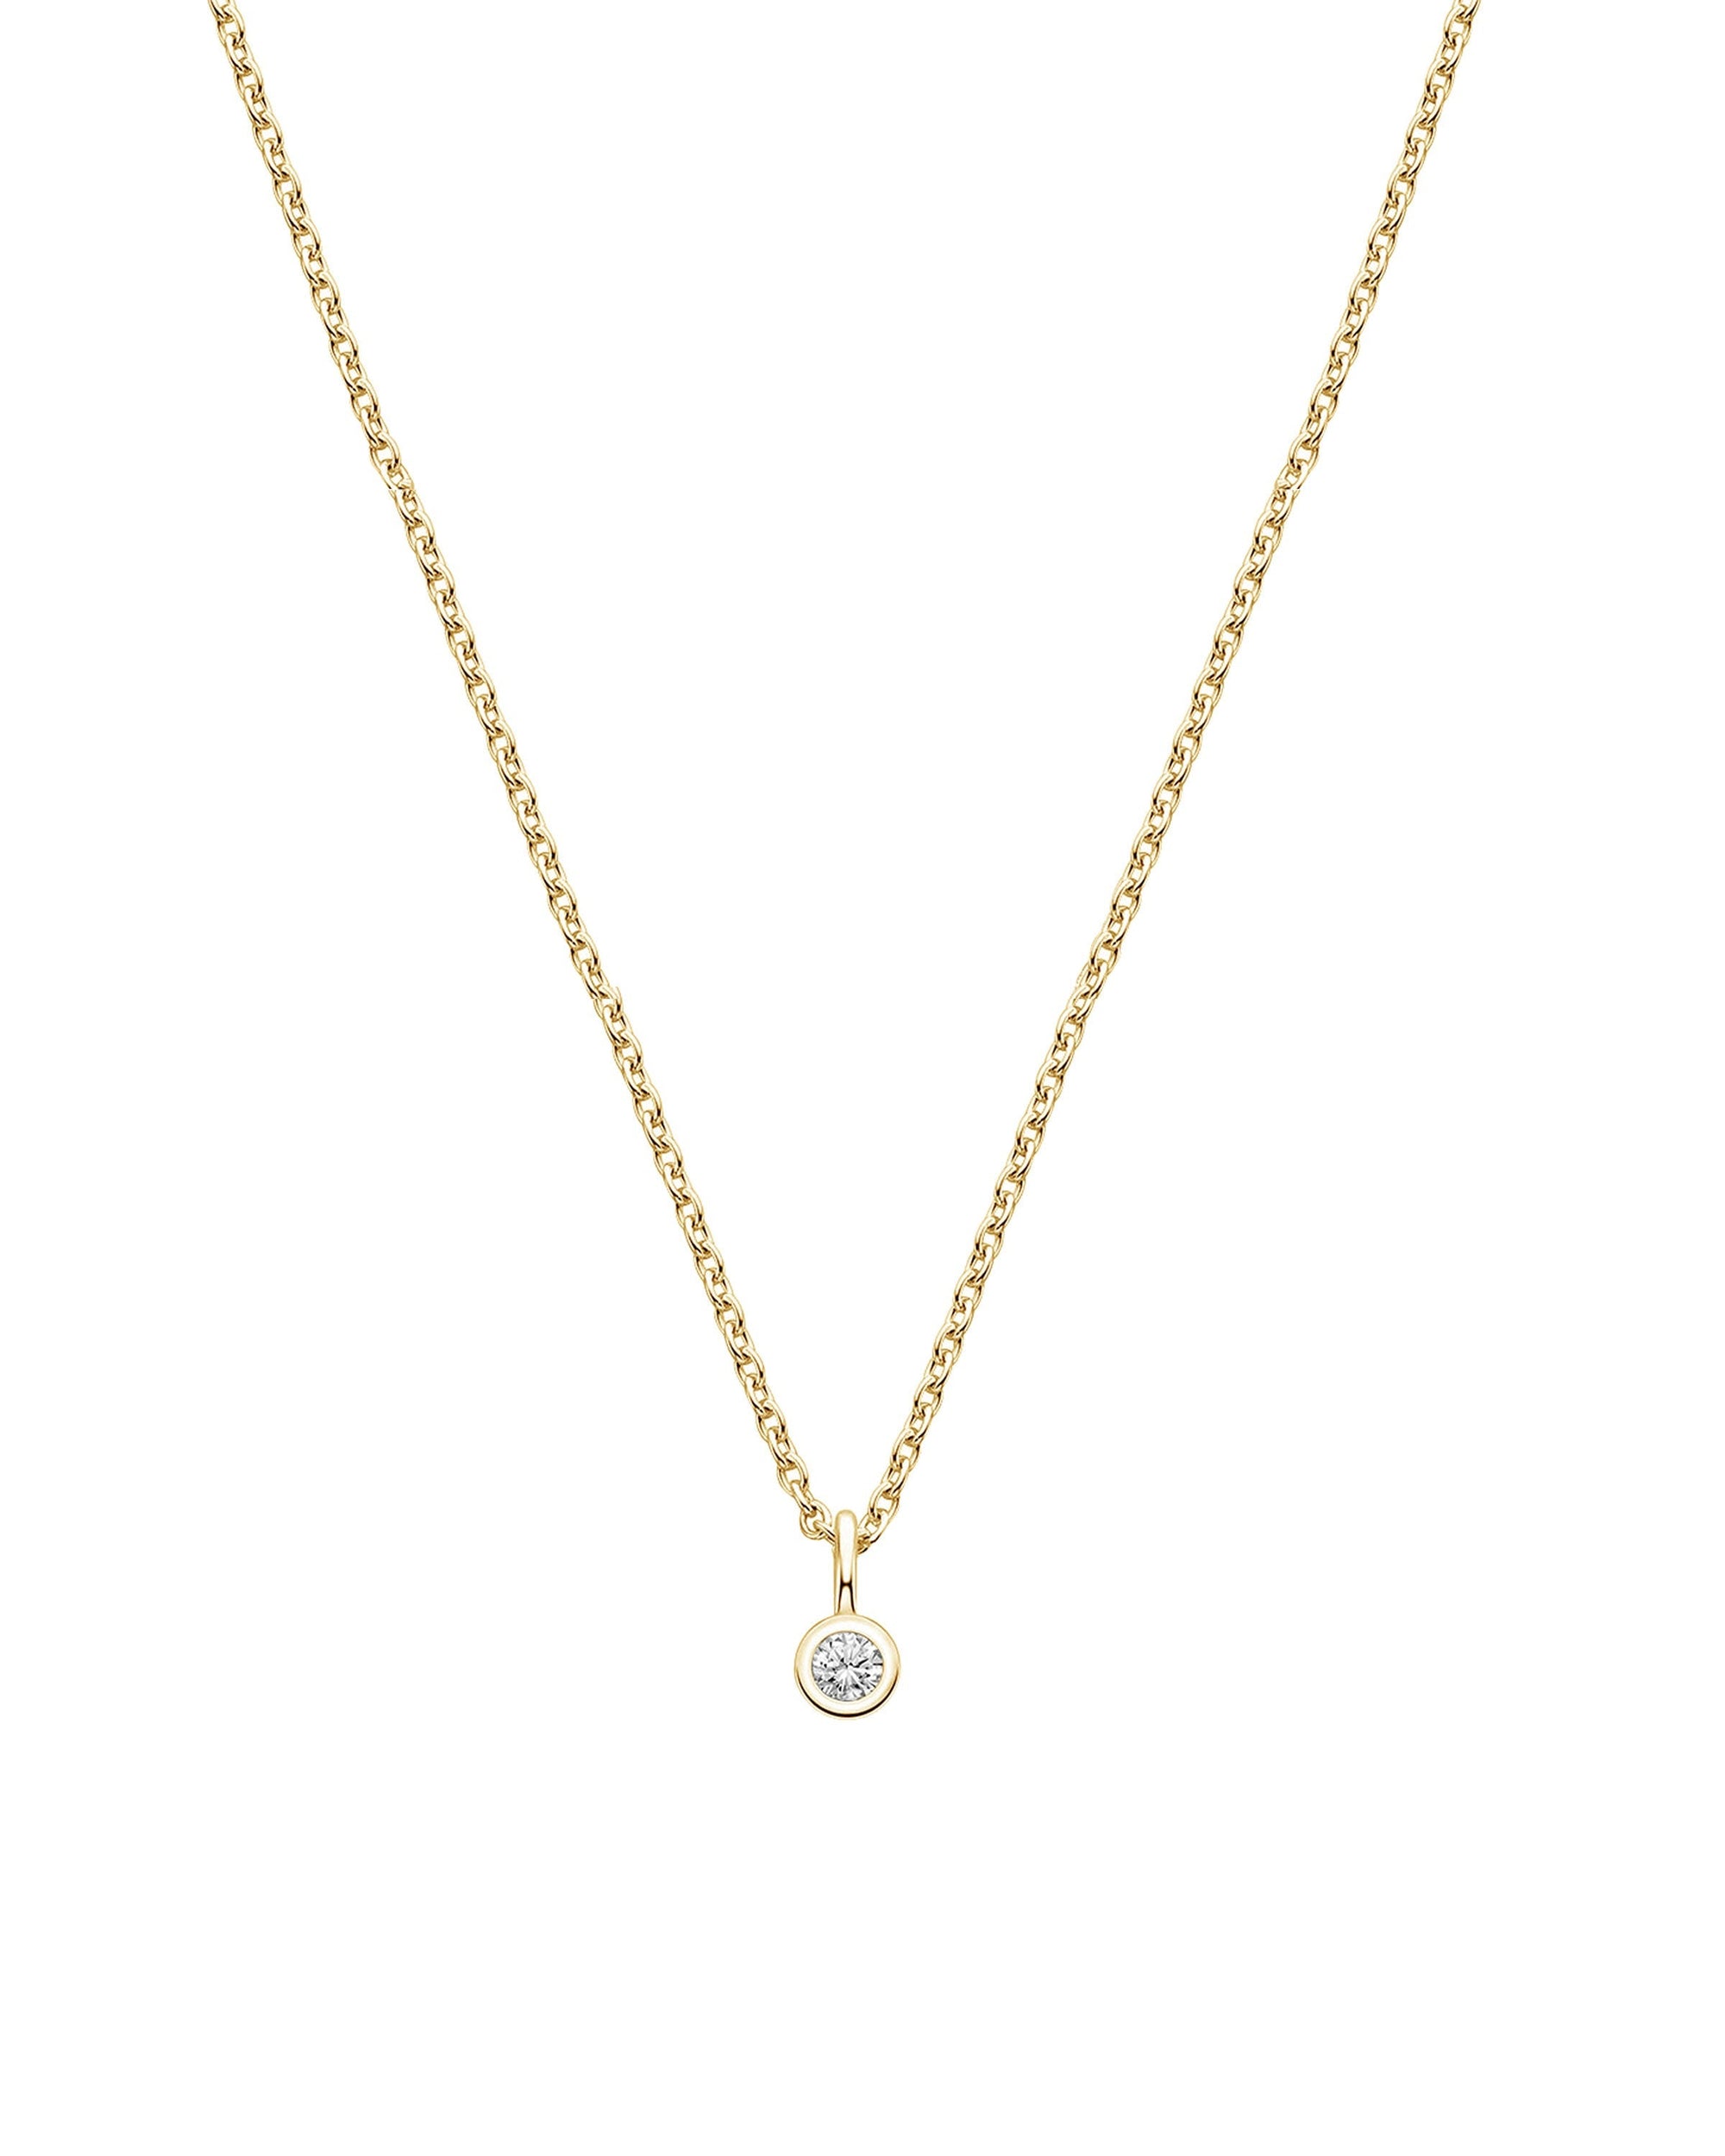 Heritage Solitaire Petite Diamond Pendant Necklace